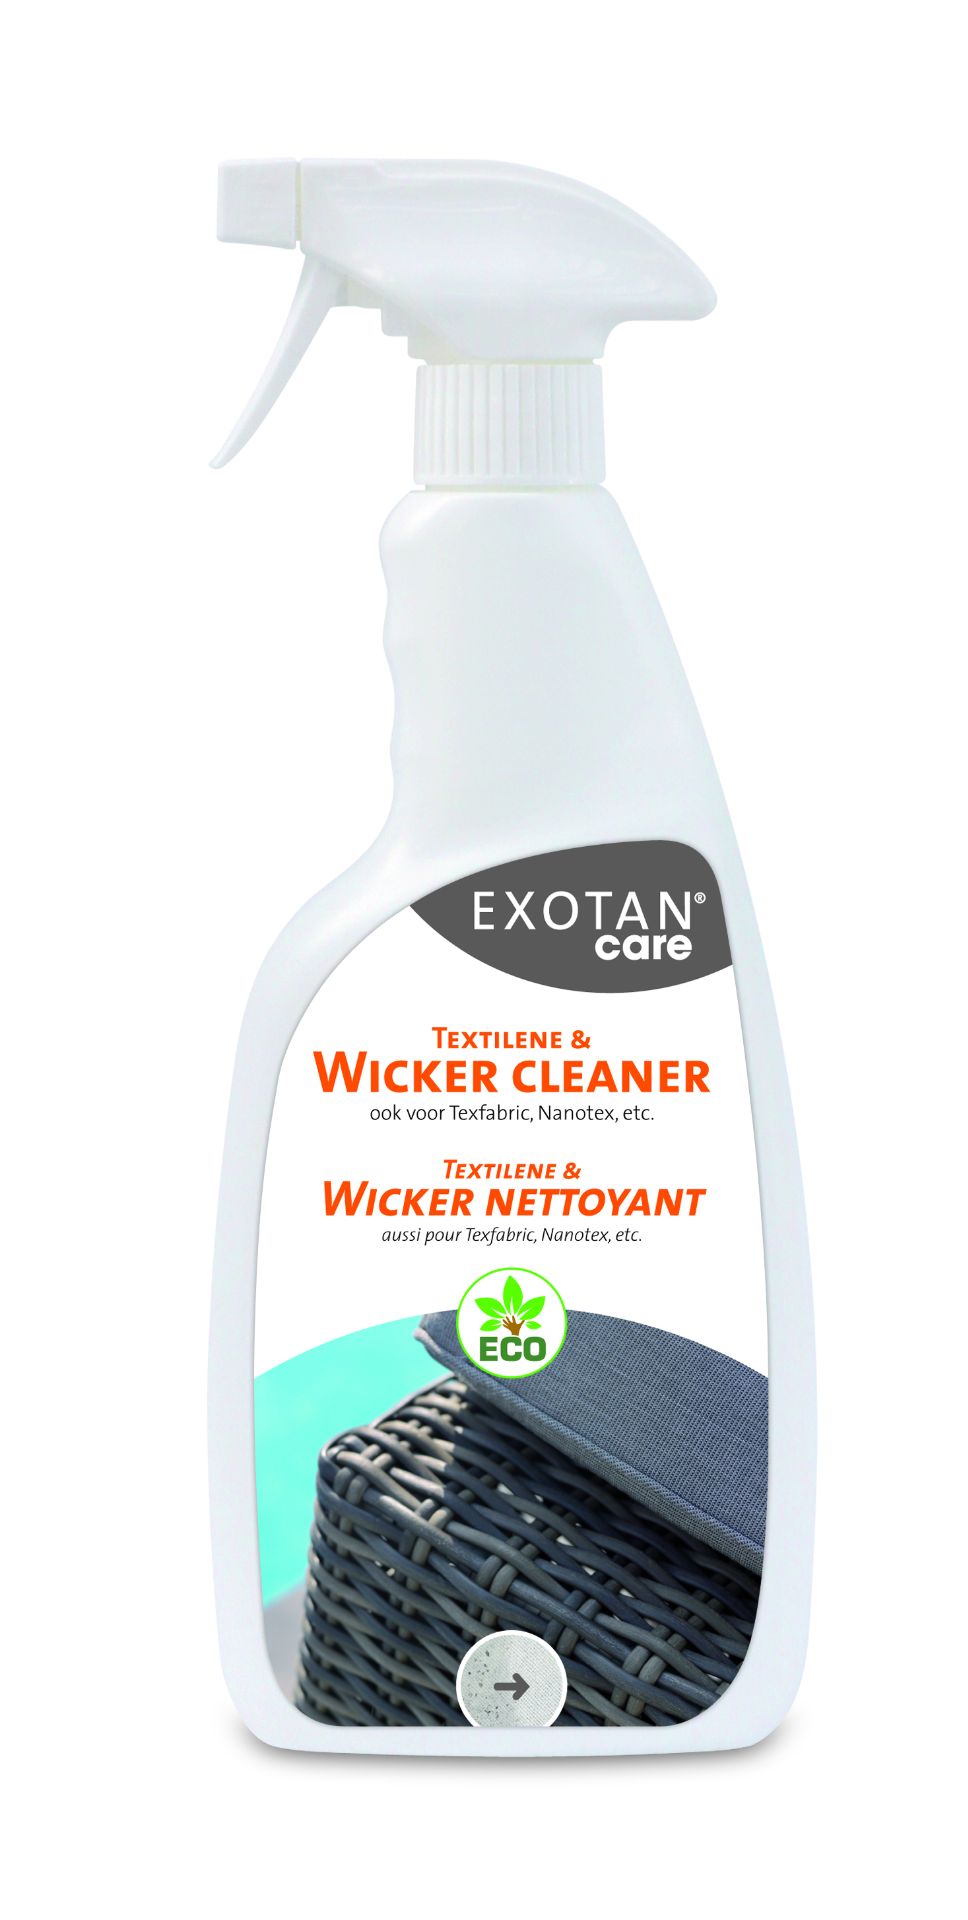 Exotan Care textilene & wicker cleaner